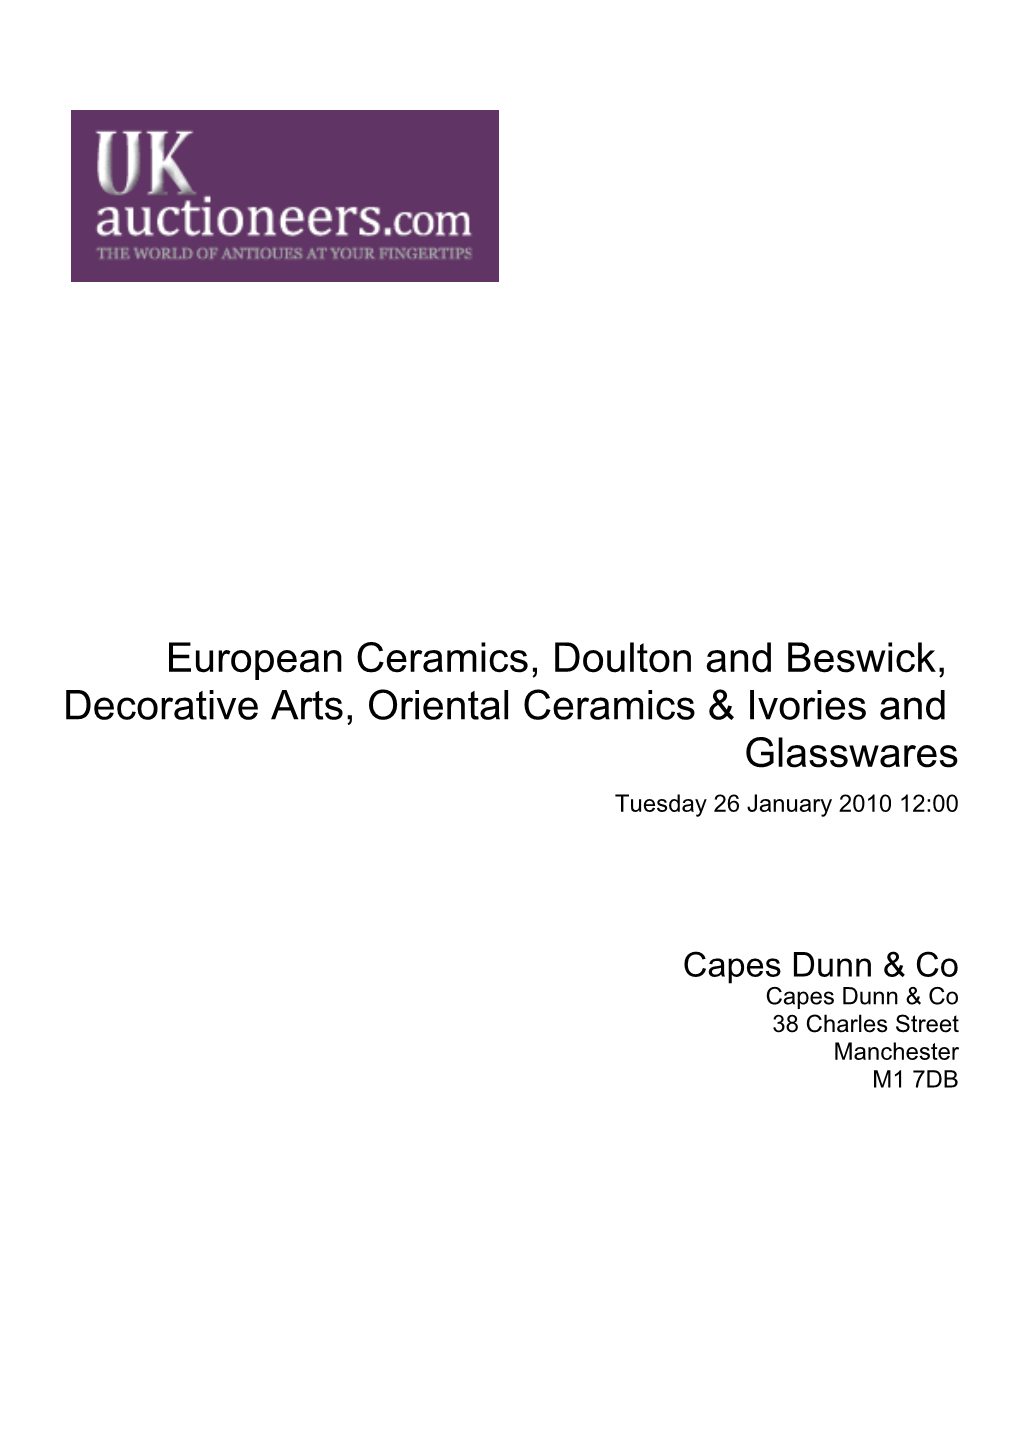 European Ceramics, Doulton and Beswick, Decorative Arts, Oriental Ceramics & Ivories and Glasswares Tuesday 26 January 2010 12:00